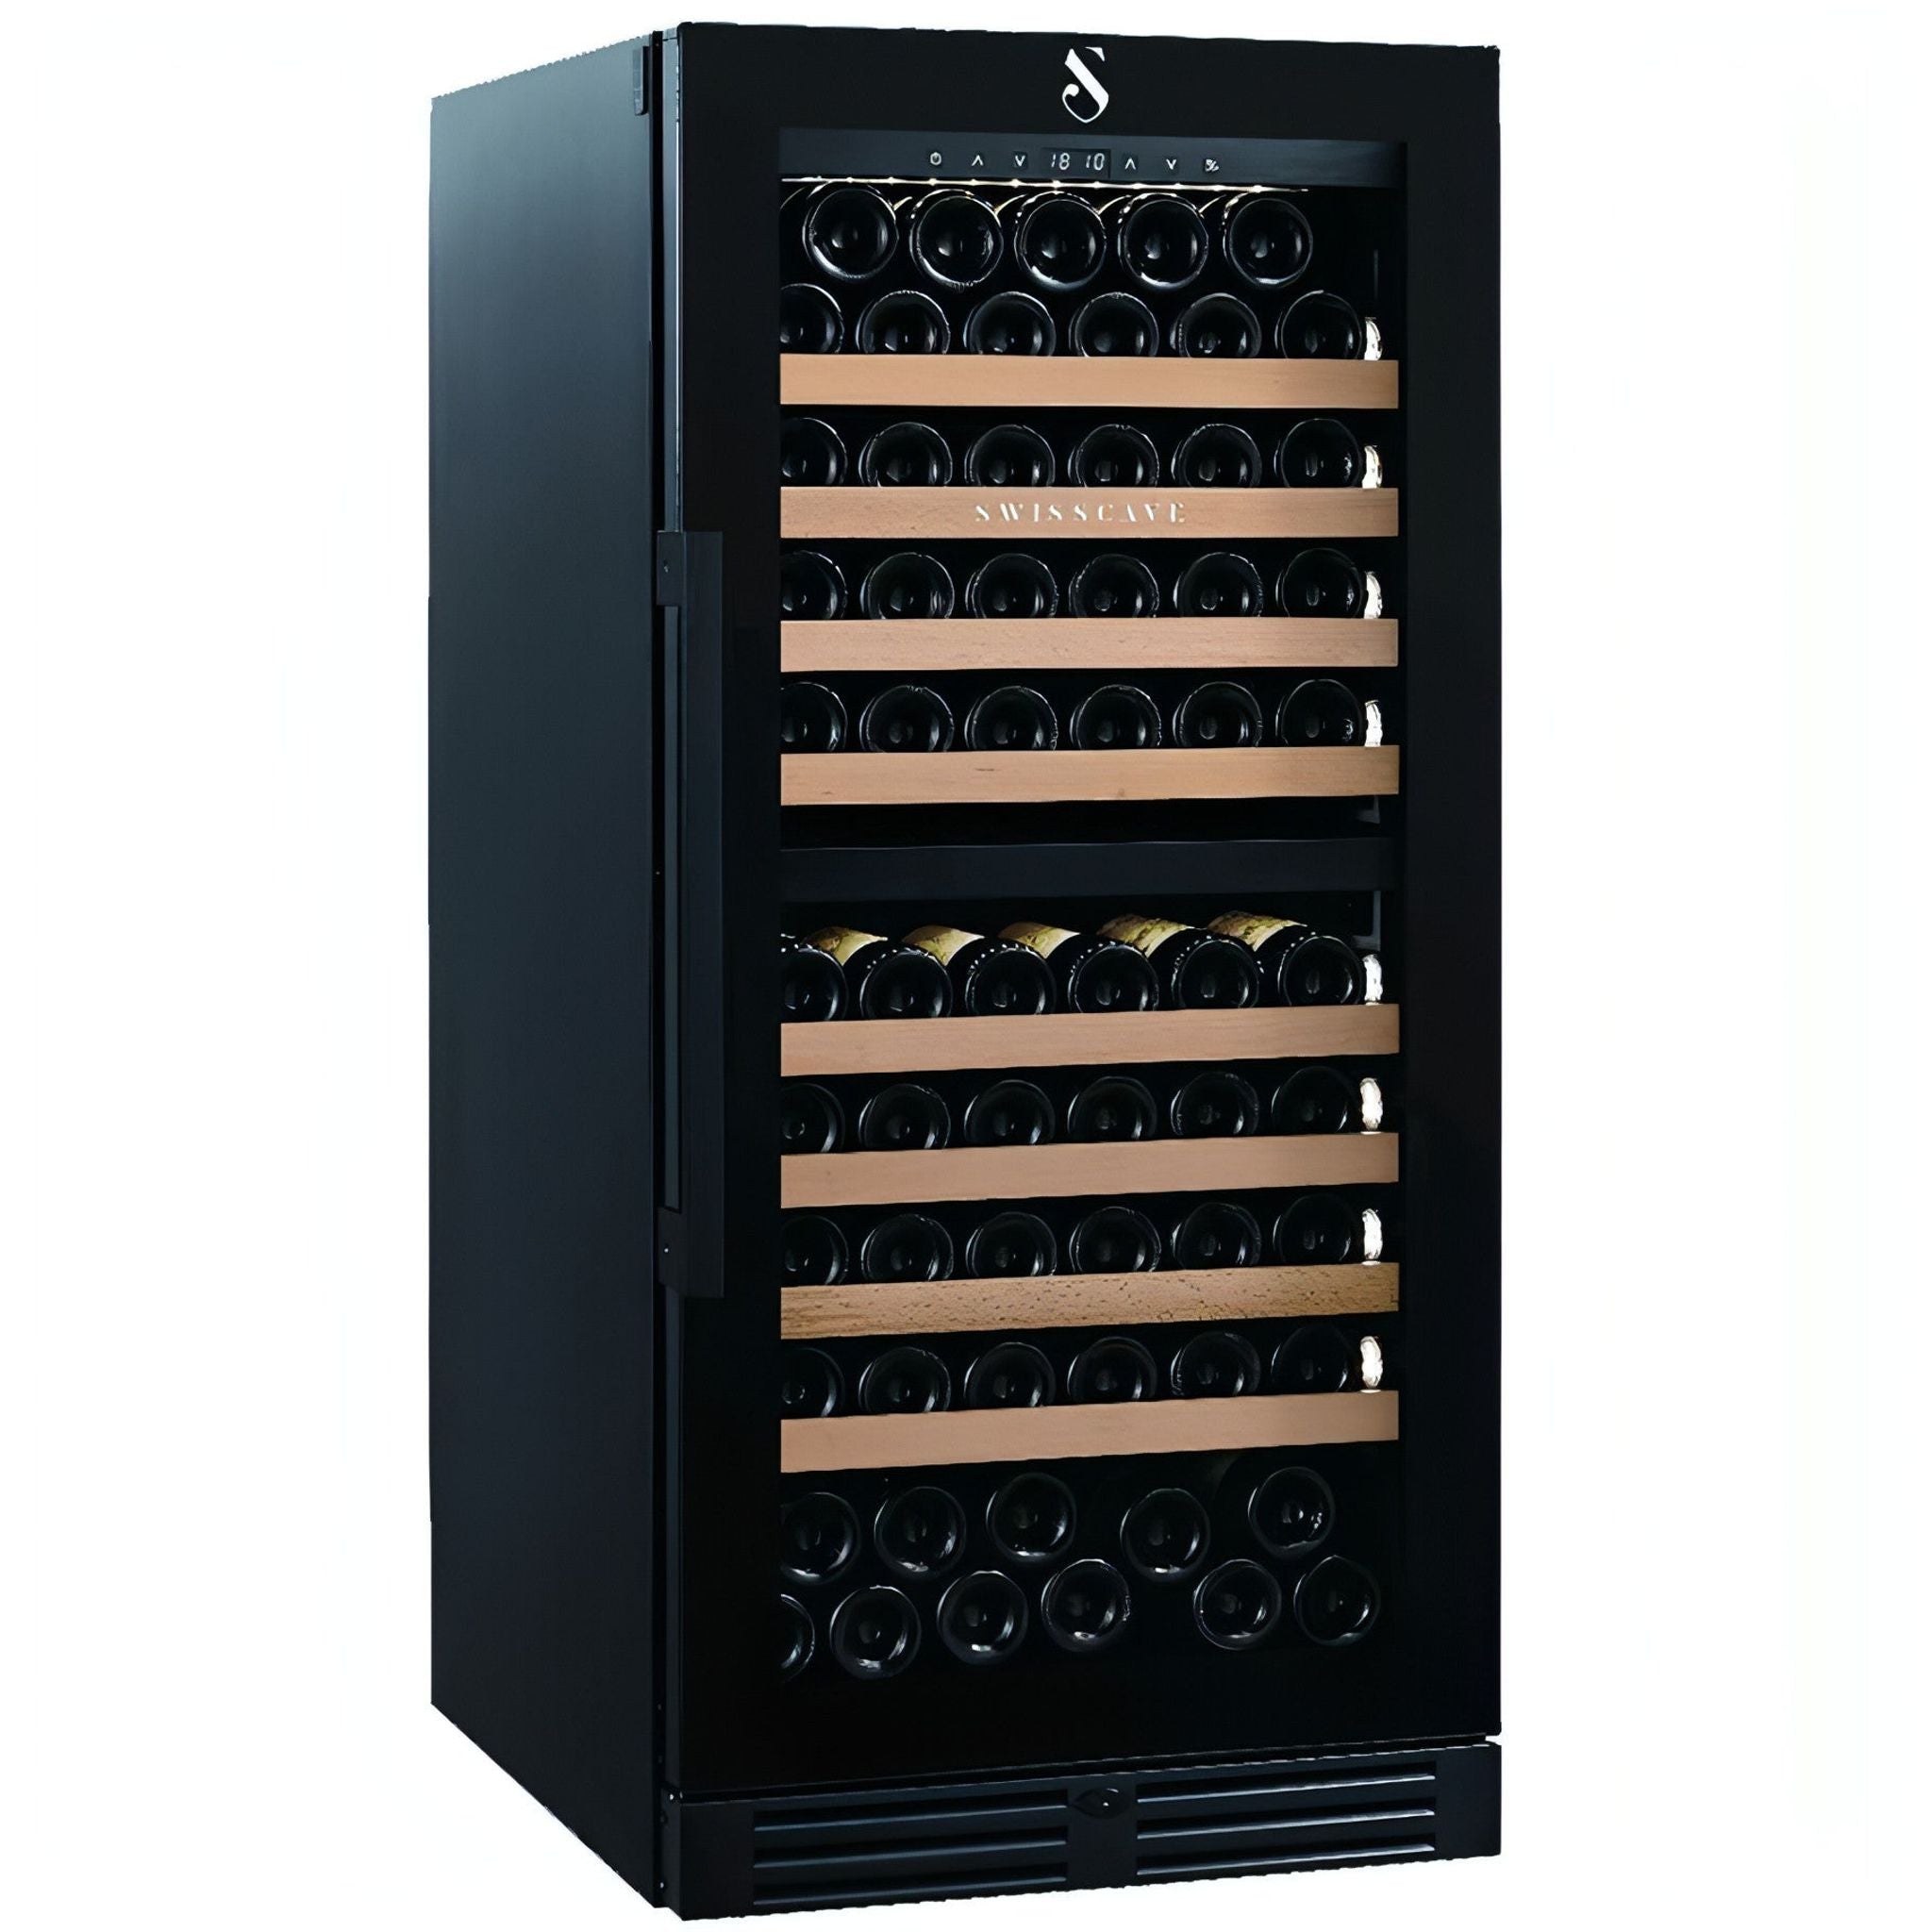 SWISSCAVE Premium - 600mm Dual Zone - 103 Bottle - Freestanding / Built in Wine Cooler - WLB-360DF-MIX